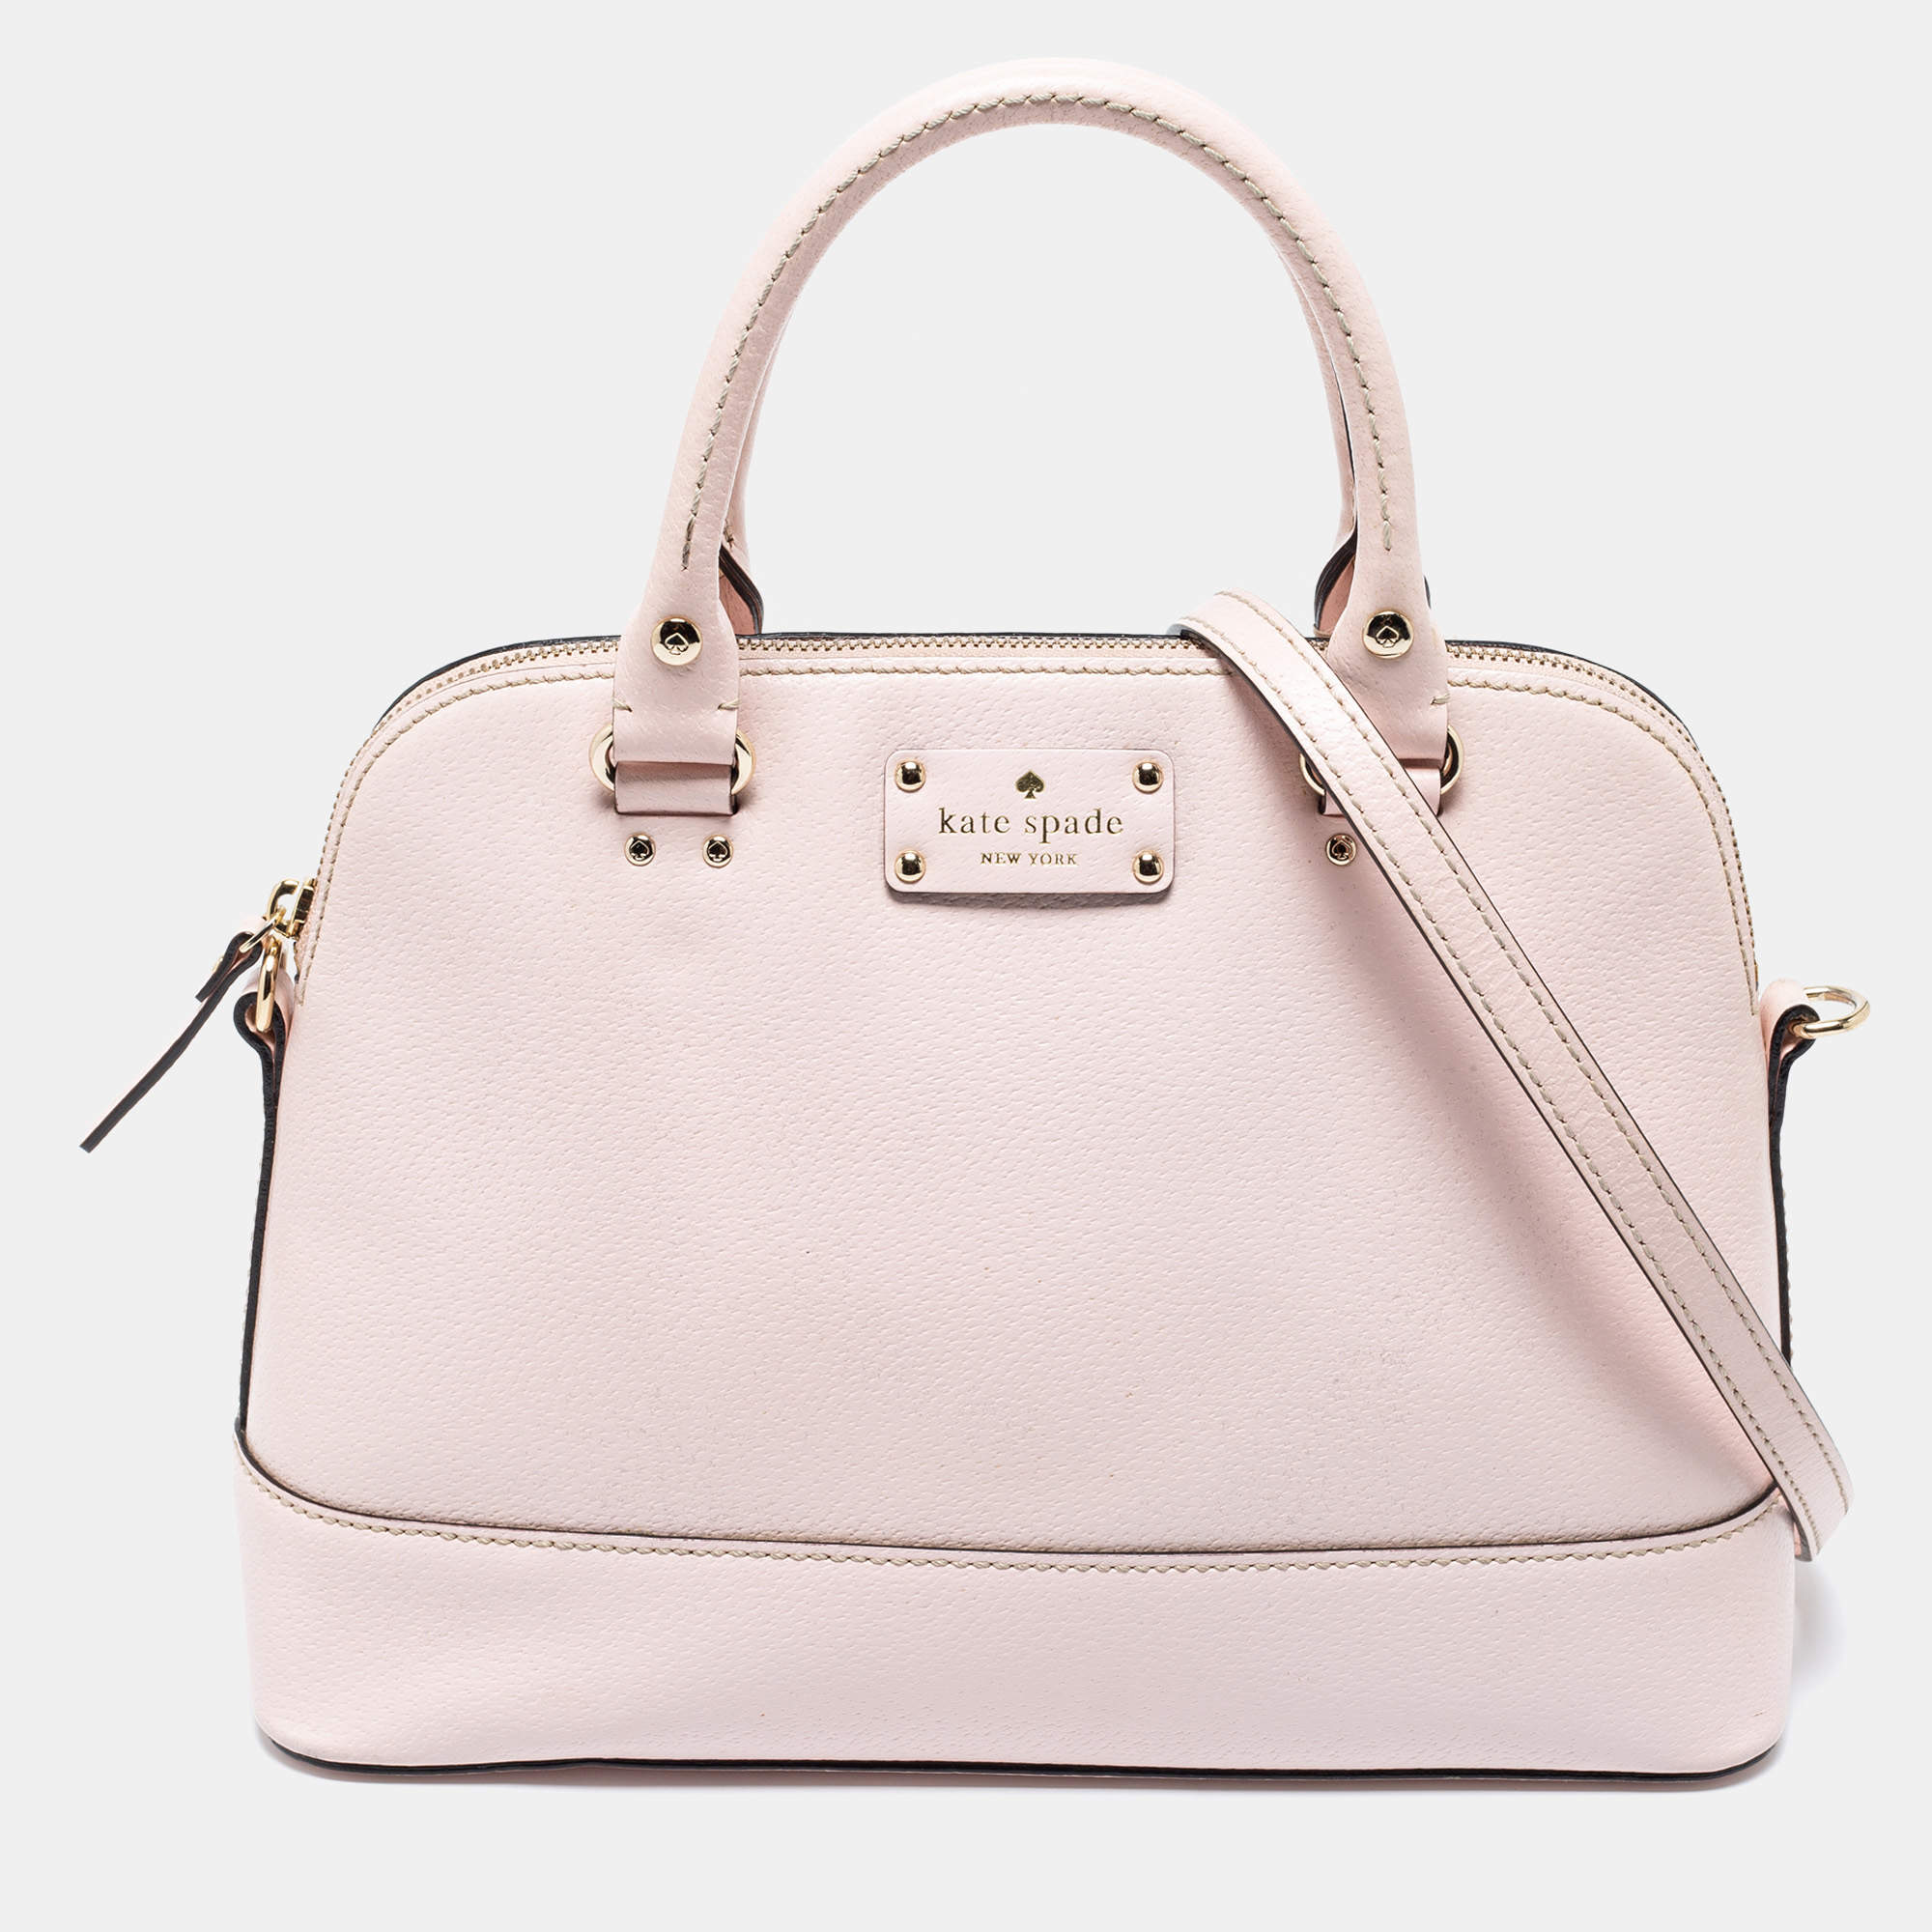 Light pink Kate spade purse | Kate spade purse pink, Kate spade purse,  Purses